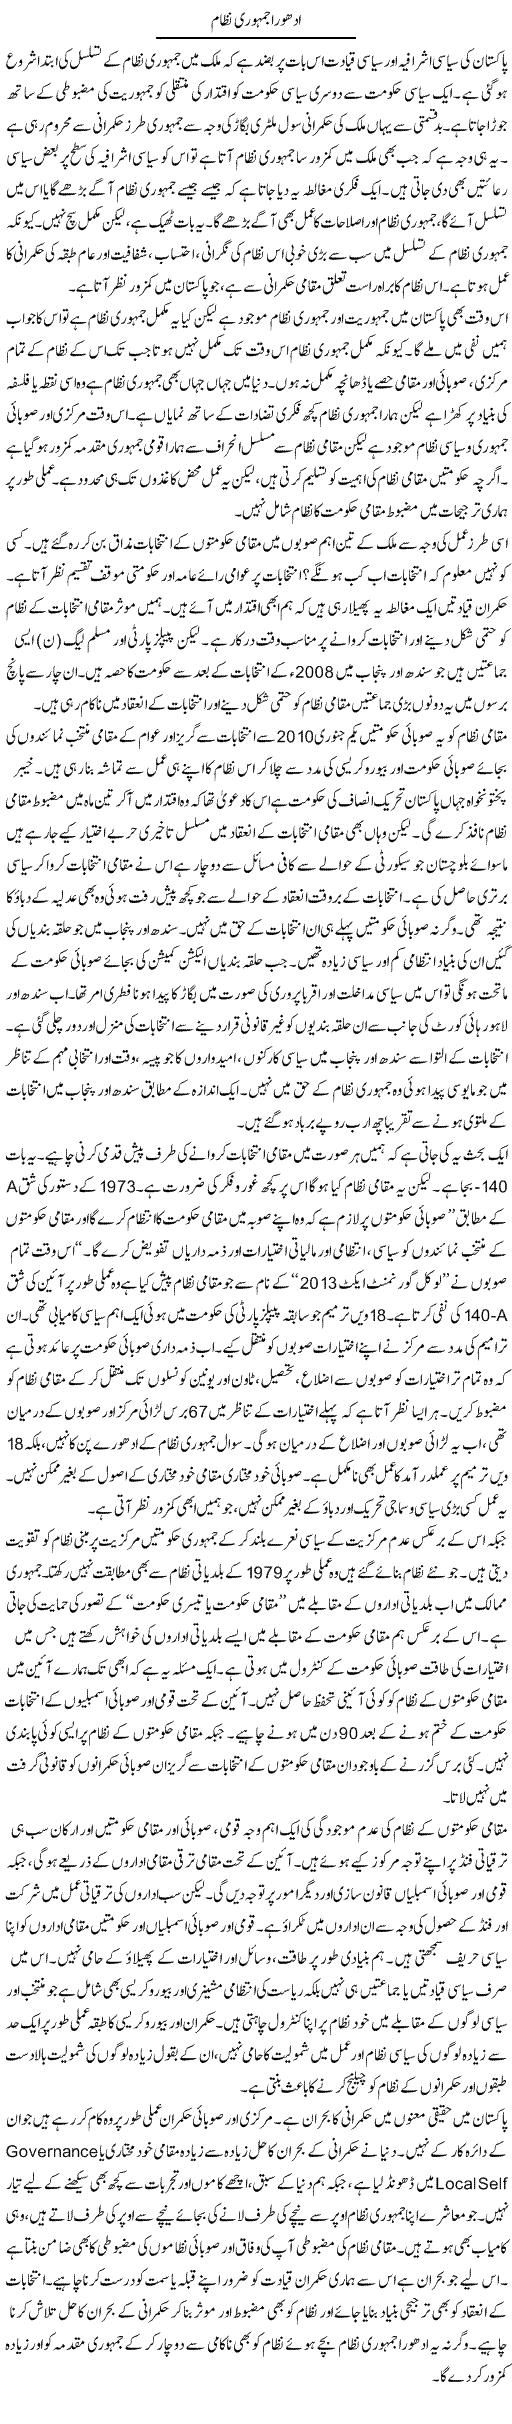 Adhoora Jamhoori Nizam | Salman Abid | Daily Urdu Columns